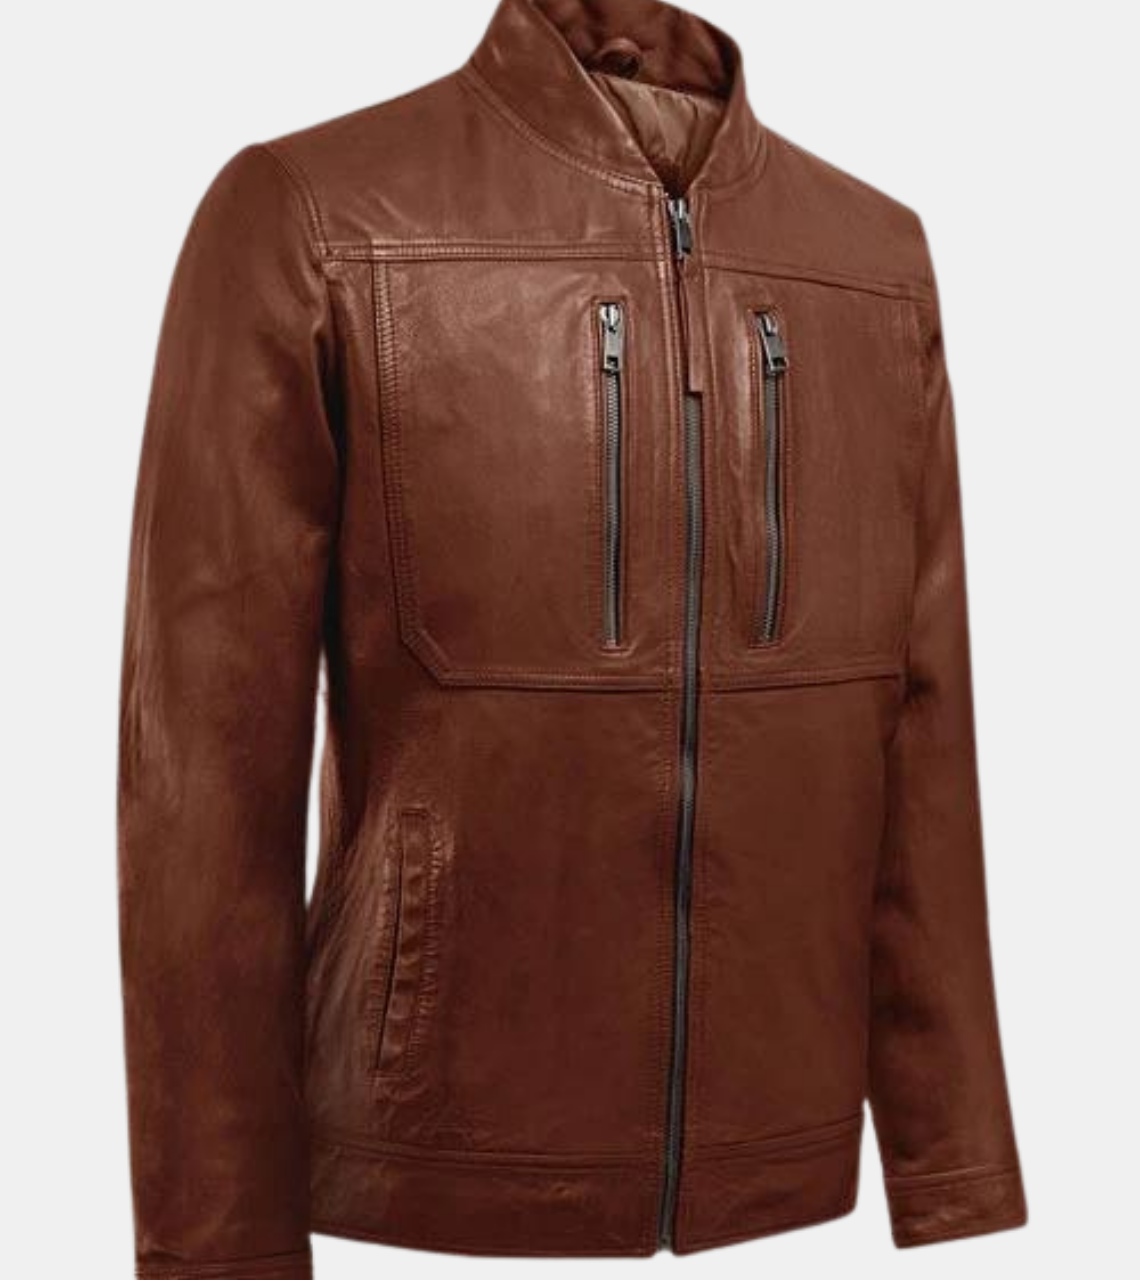  Men's Tan Brown Leather Jacket